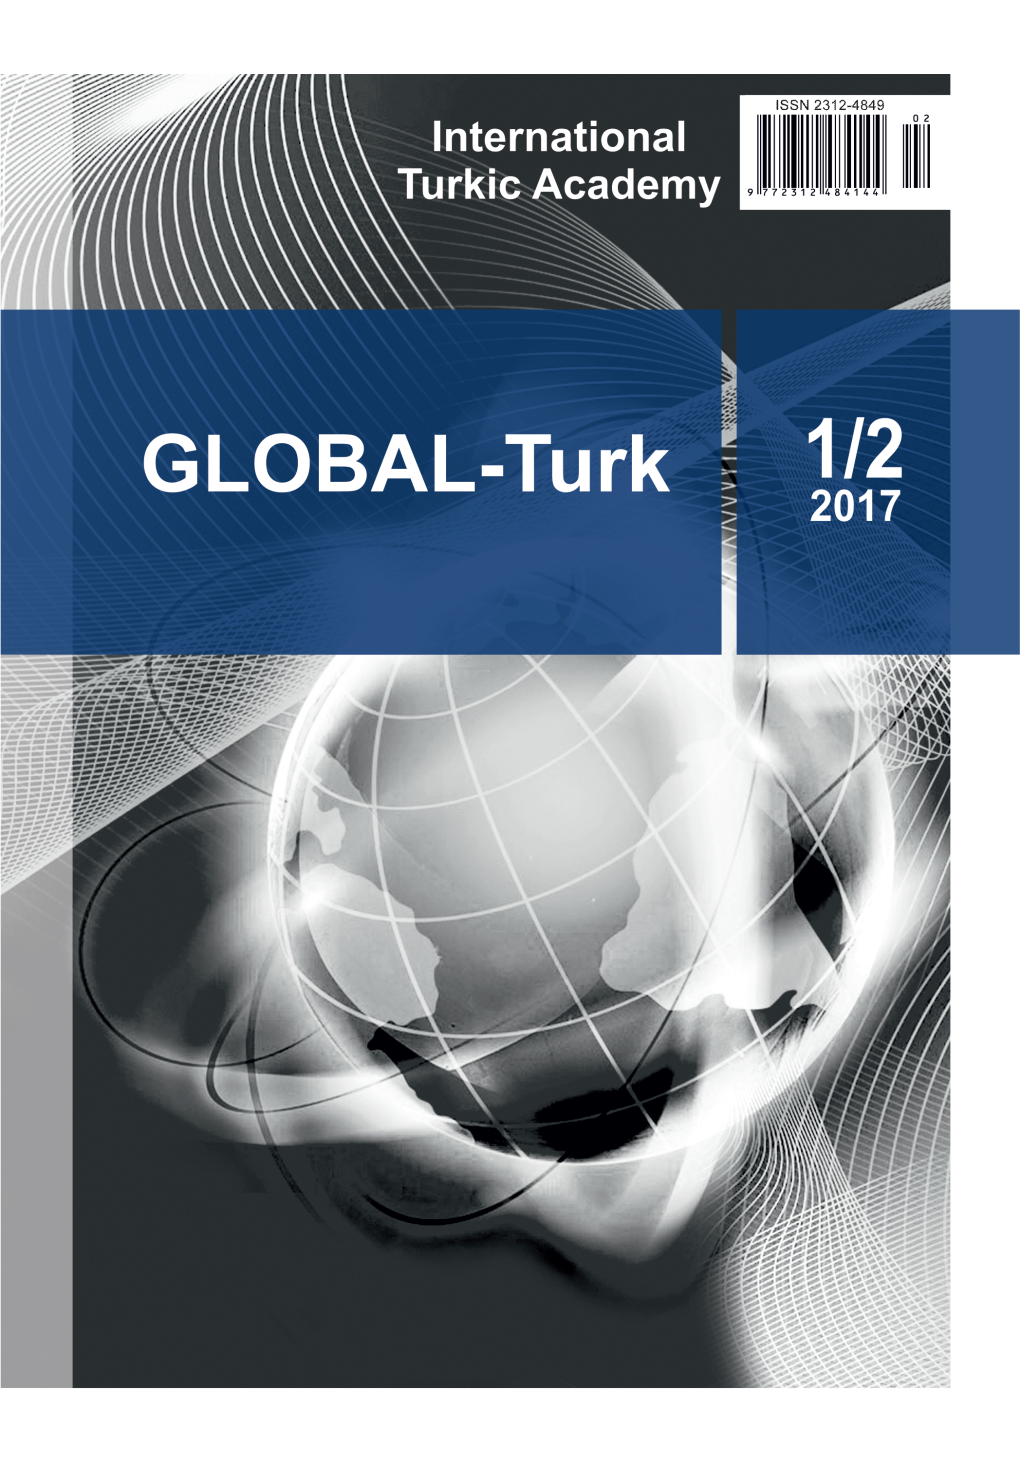 International Turkic Academy (TWESCO)